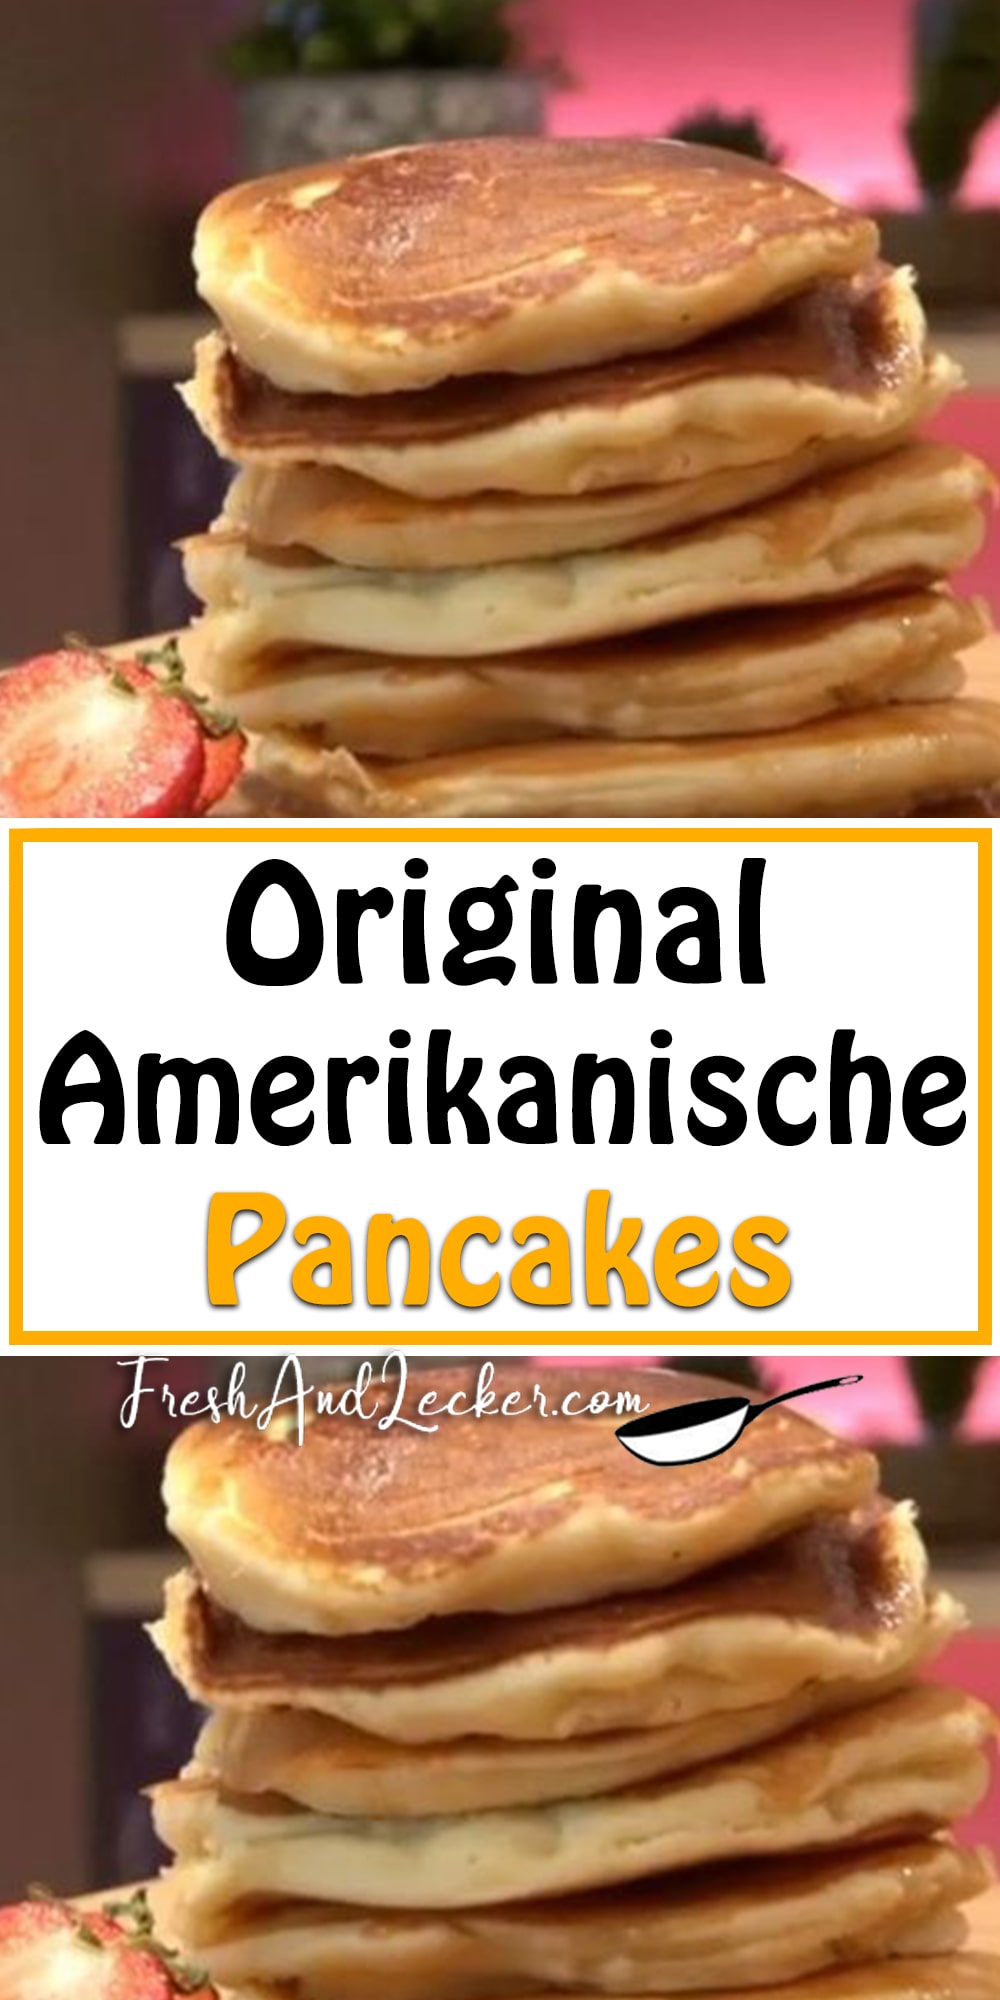 Original amerikanische Pancakes - Fresh Lecker